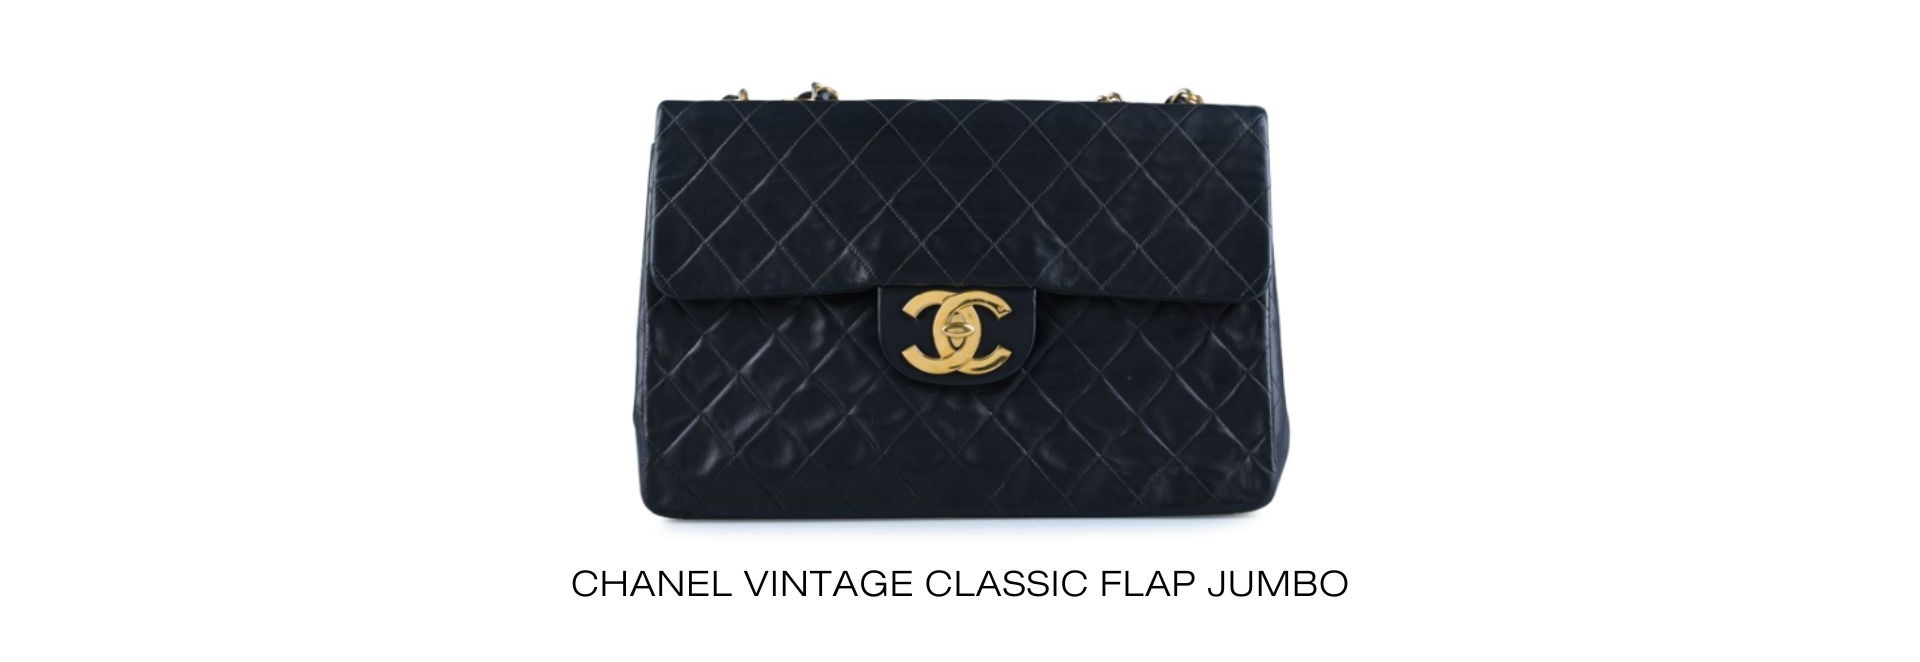 Chanel Vintage Classic Flap Jumbo แบรนด์เนมมือสอง มือ 2 sf brandname ของแท้